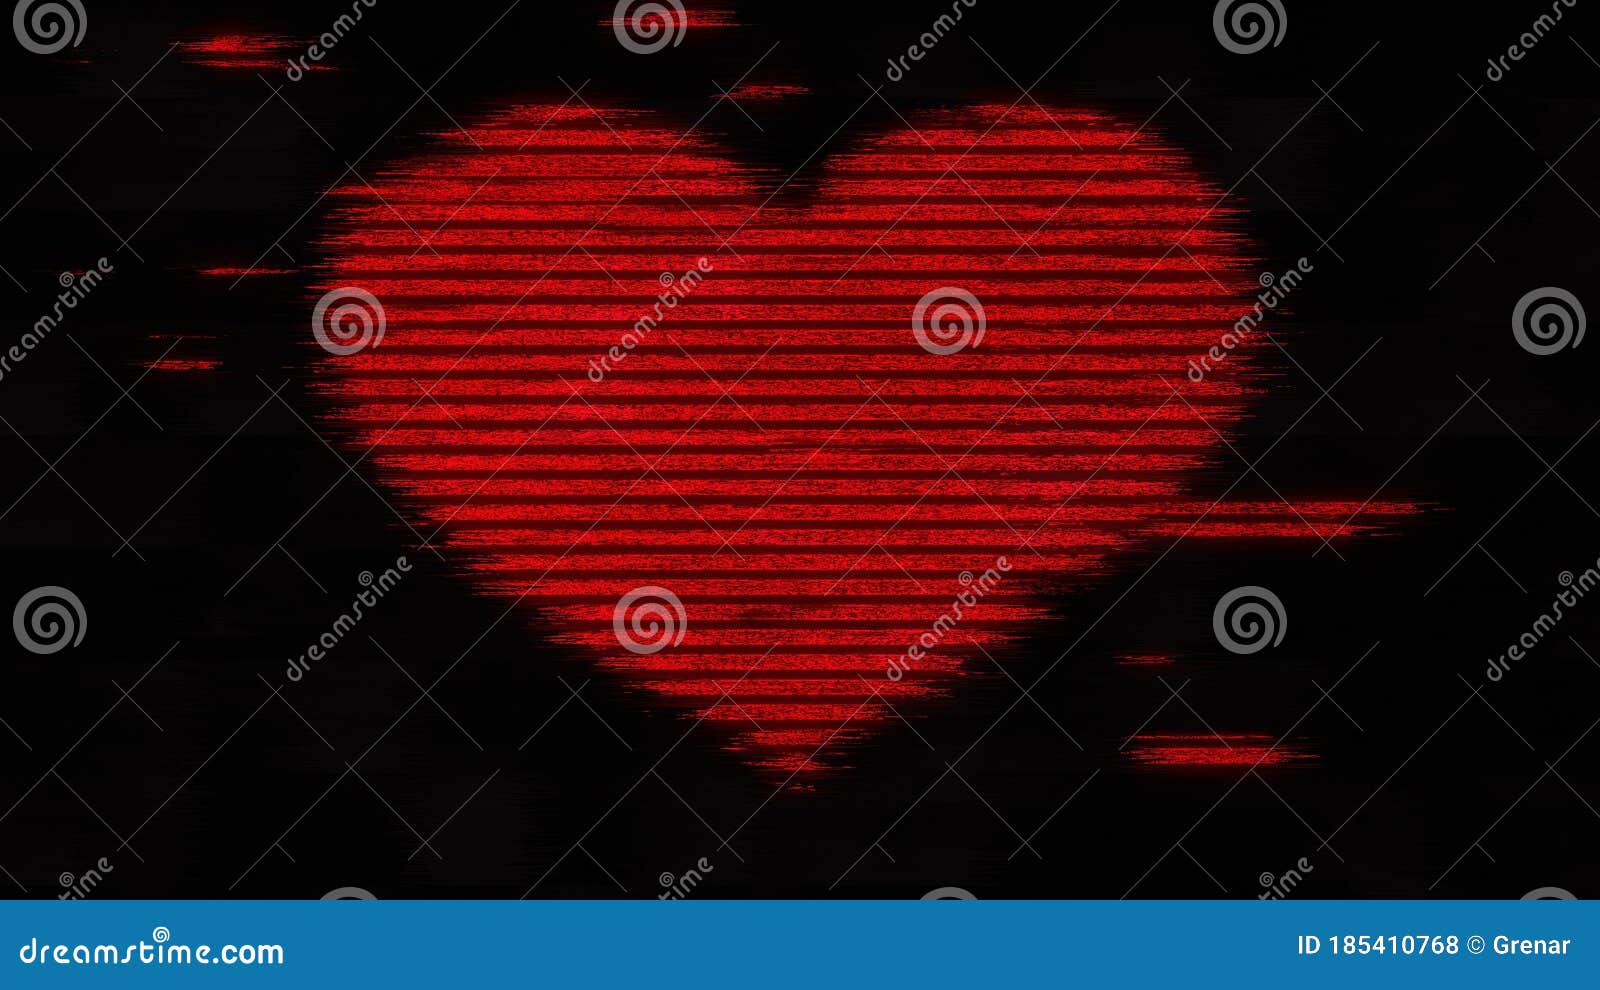 Ascii love heart